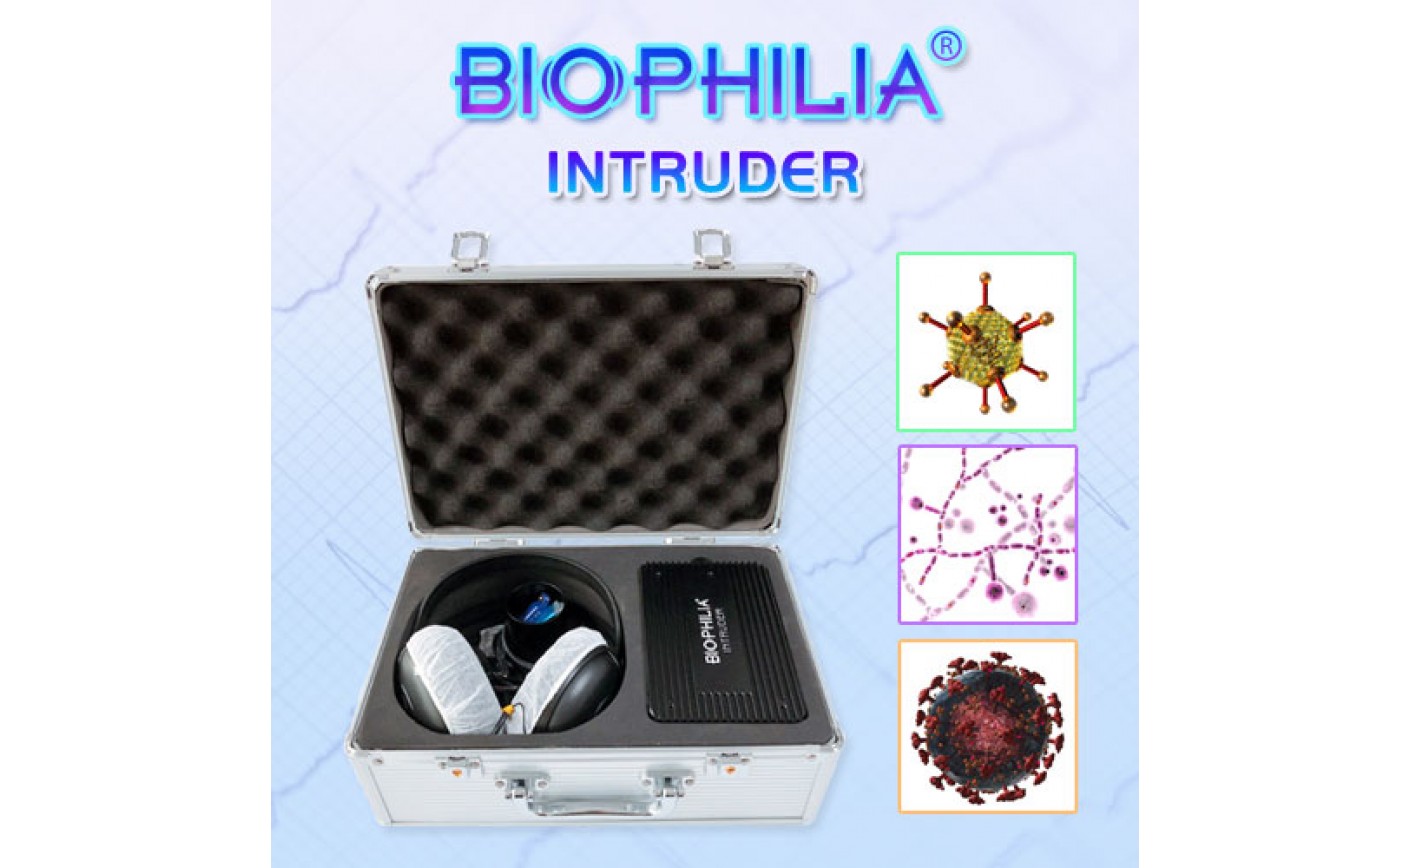 How Biophilia Intruder deals with tinnitus